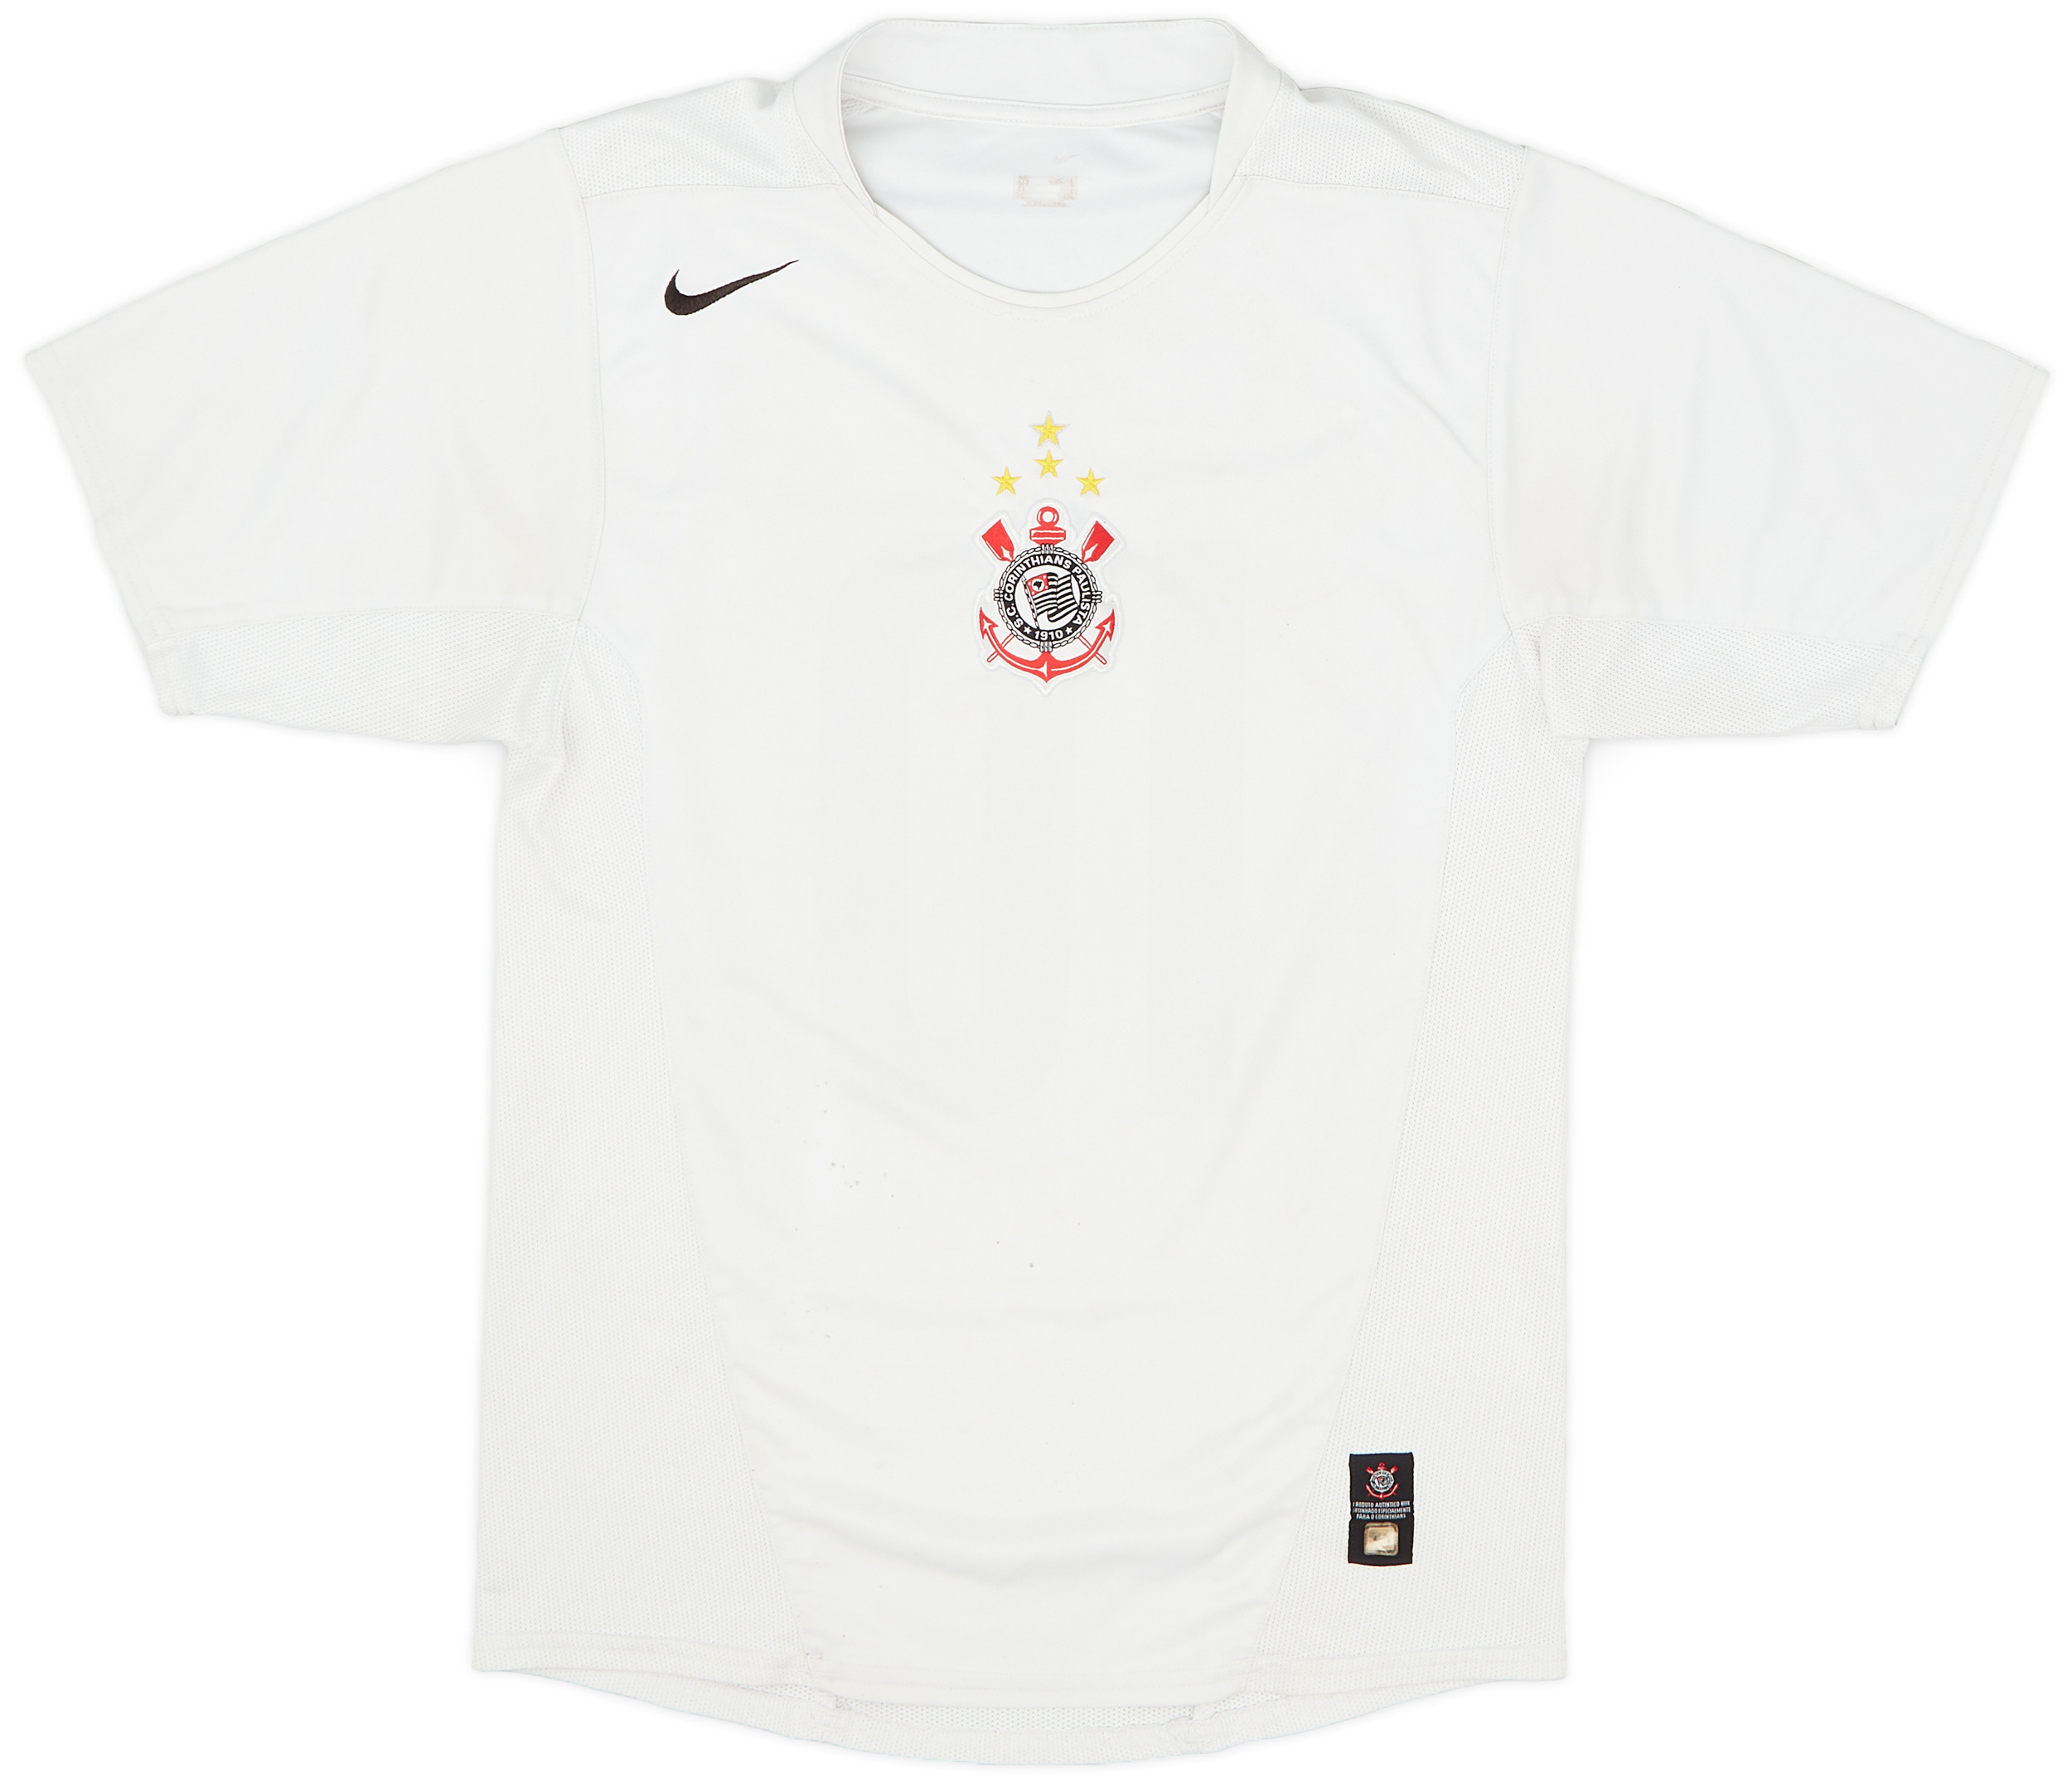 2004-05 Corinthians Home Shirt #10 (Tevez) - 5/10 - ()